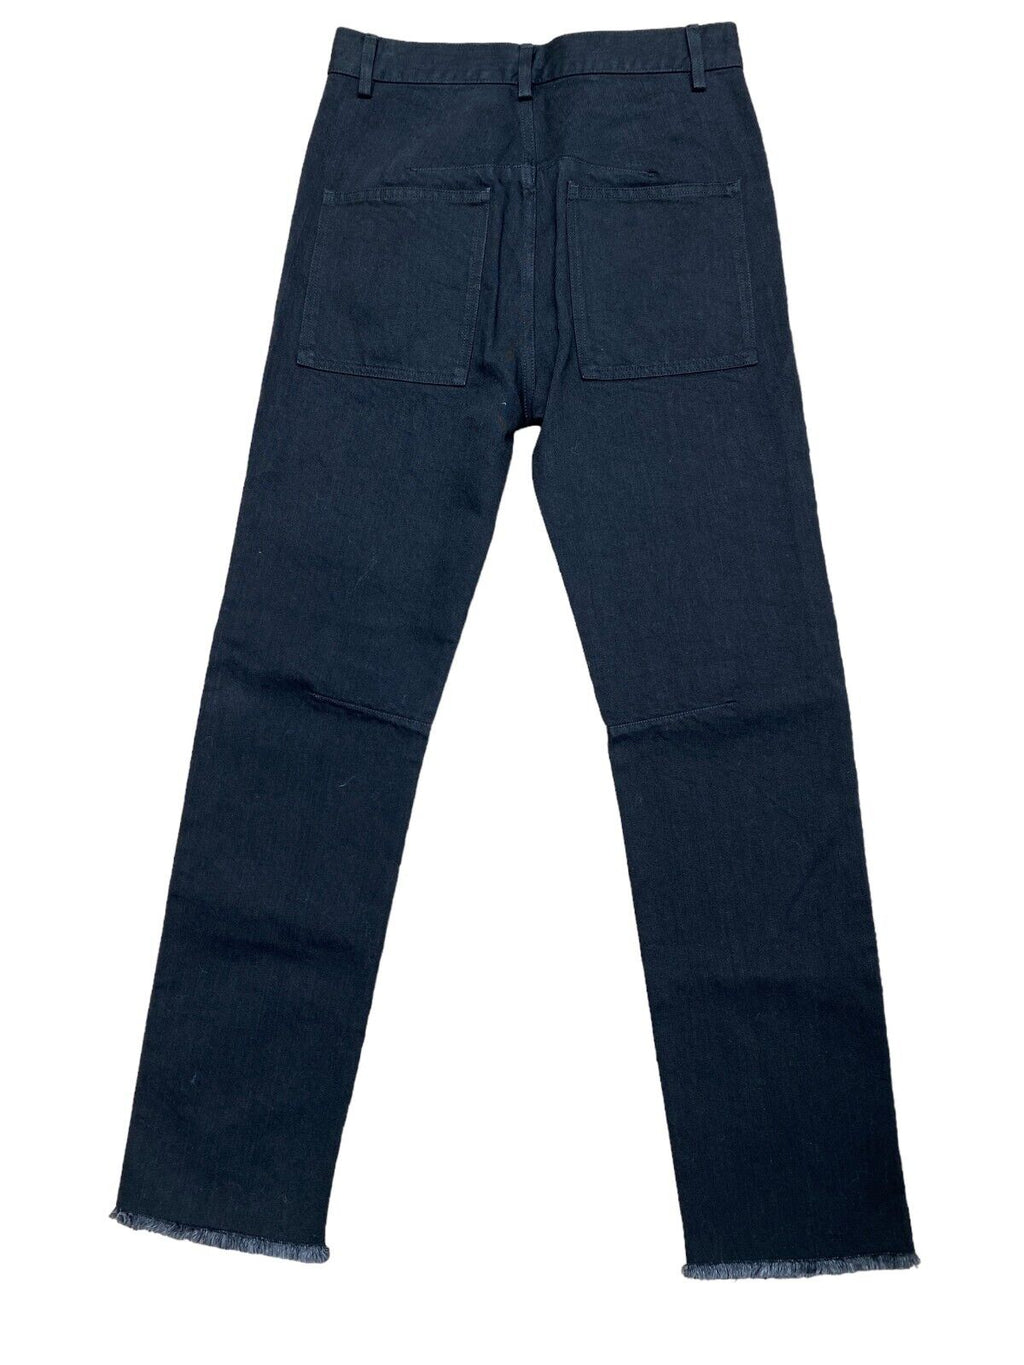 High Waist Heavy Black Denim Jeans  Size 34 US 26